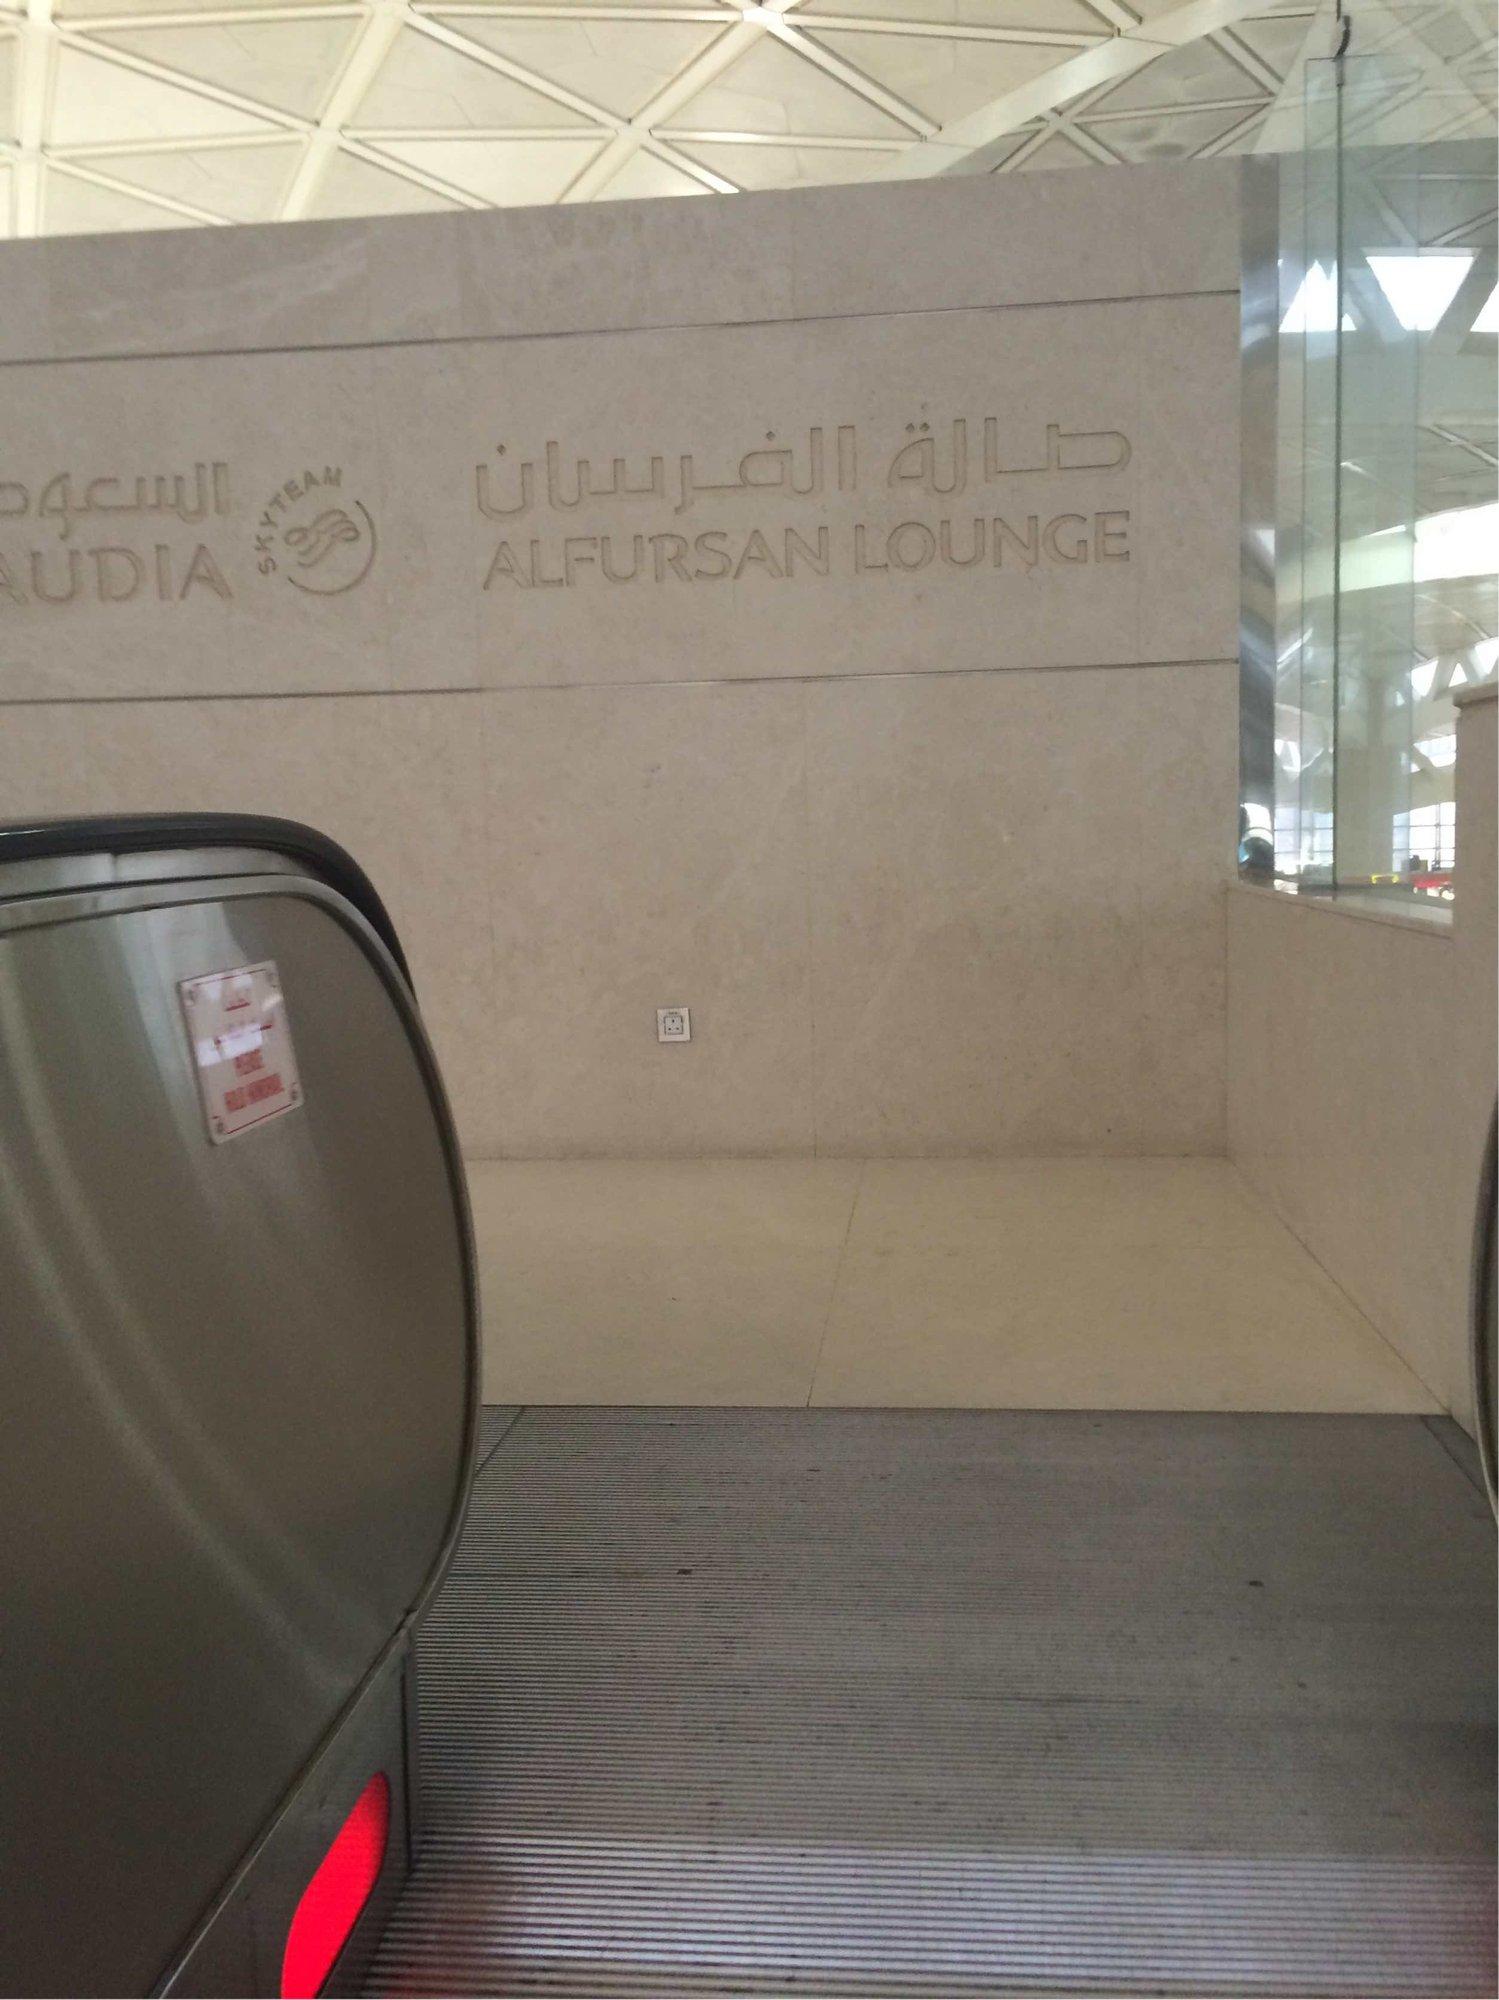 Saudia Al-Fursan Golden Lounge (Domestic) image 1 of 3